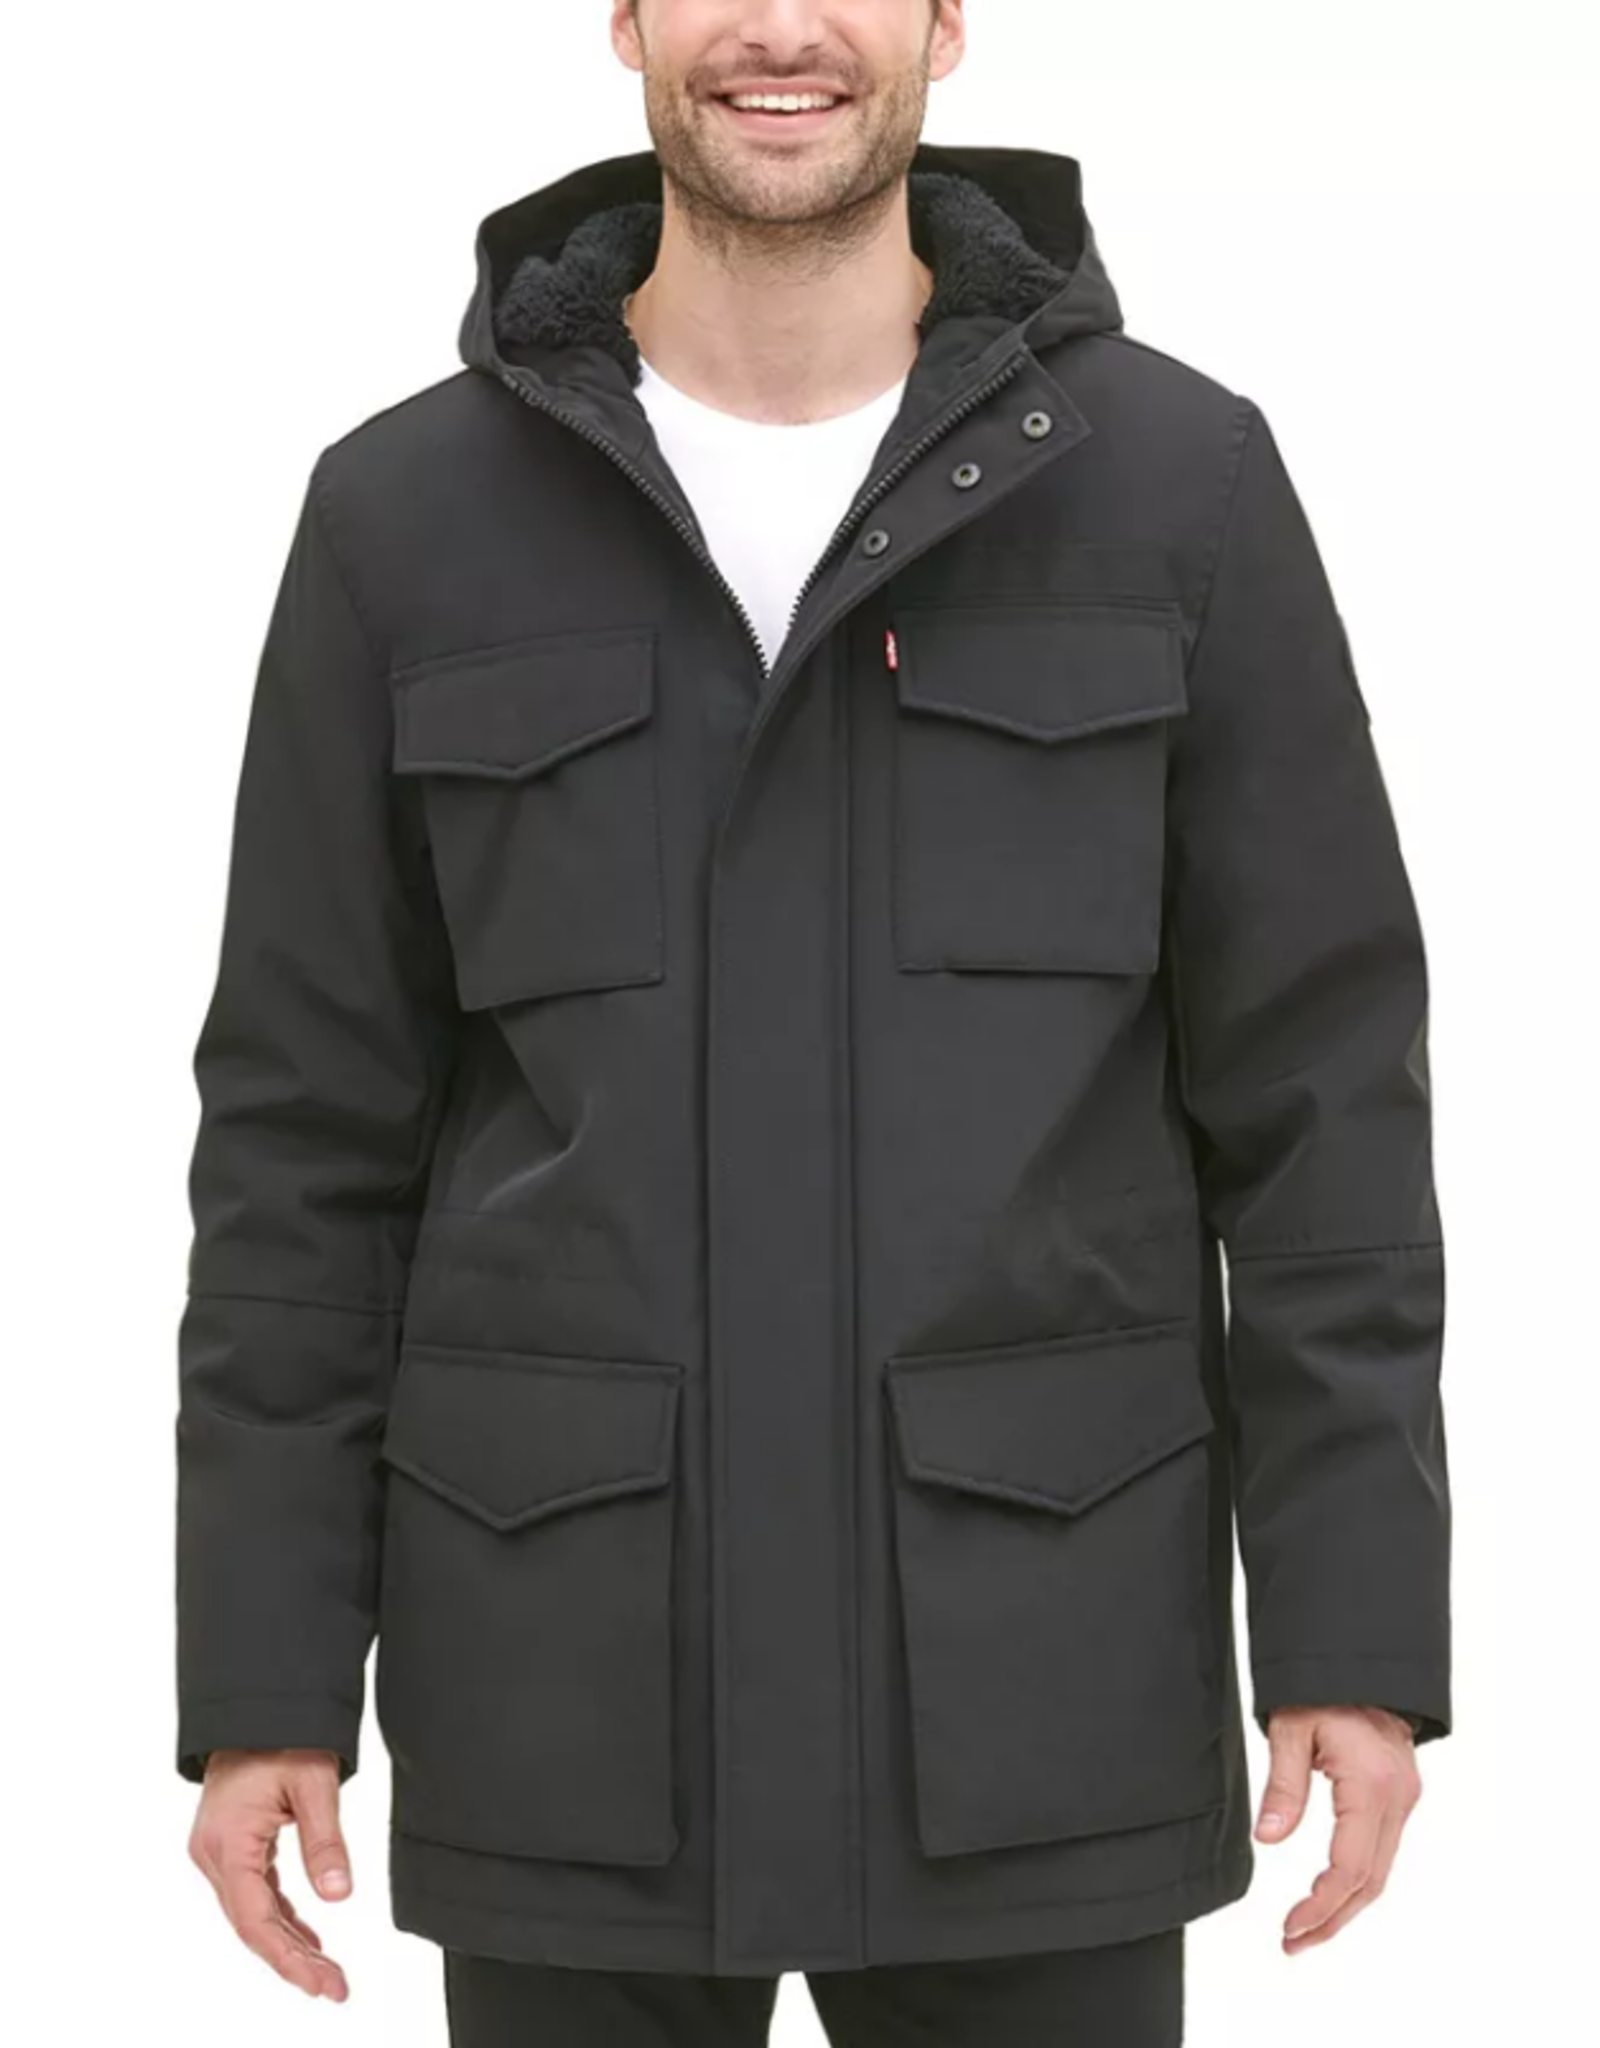 LEVI STRAUSS Men's Four-Pocket Jacket with Fleece Lining